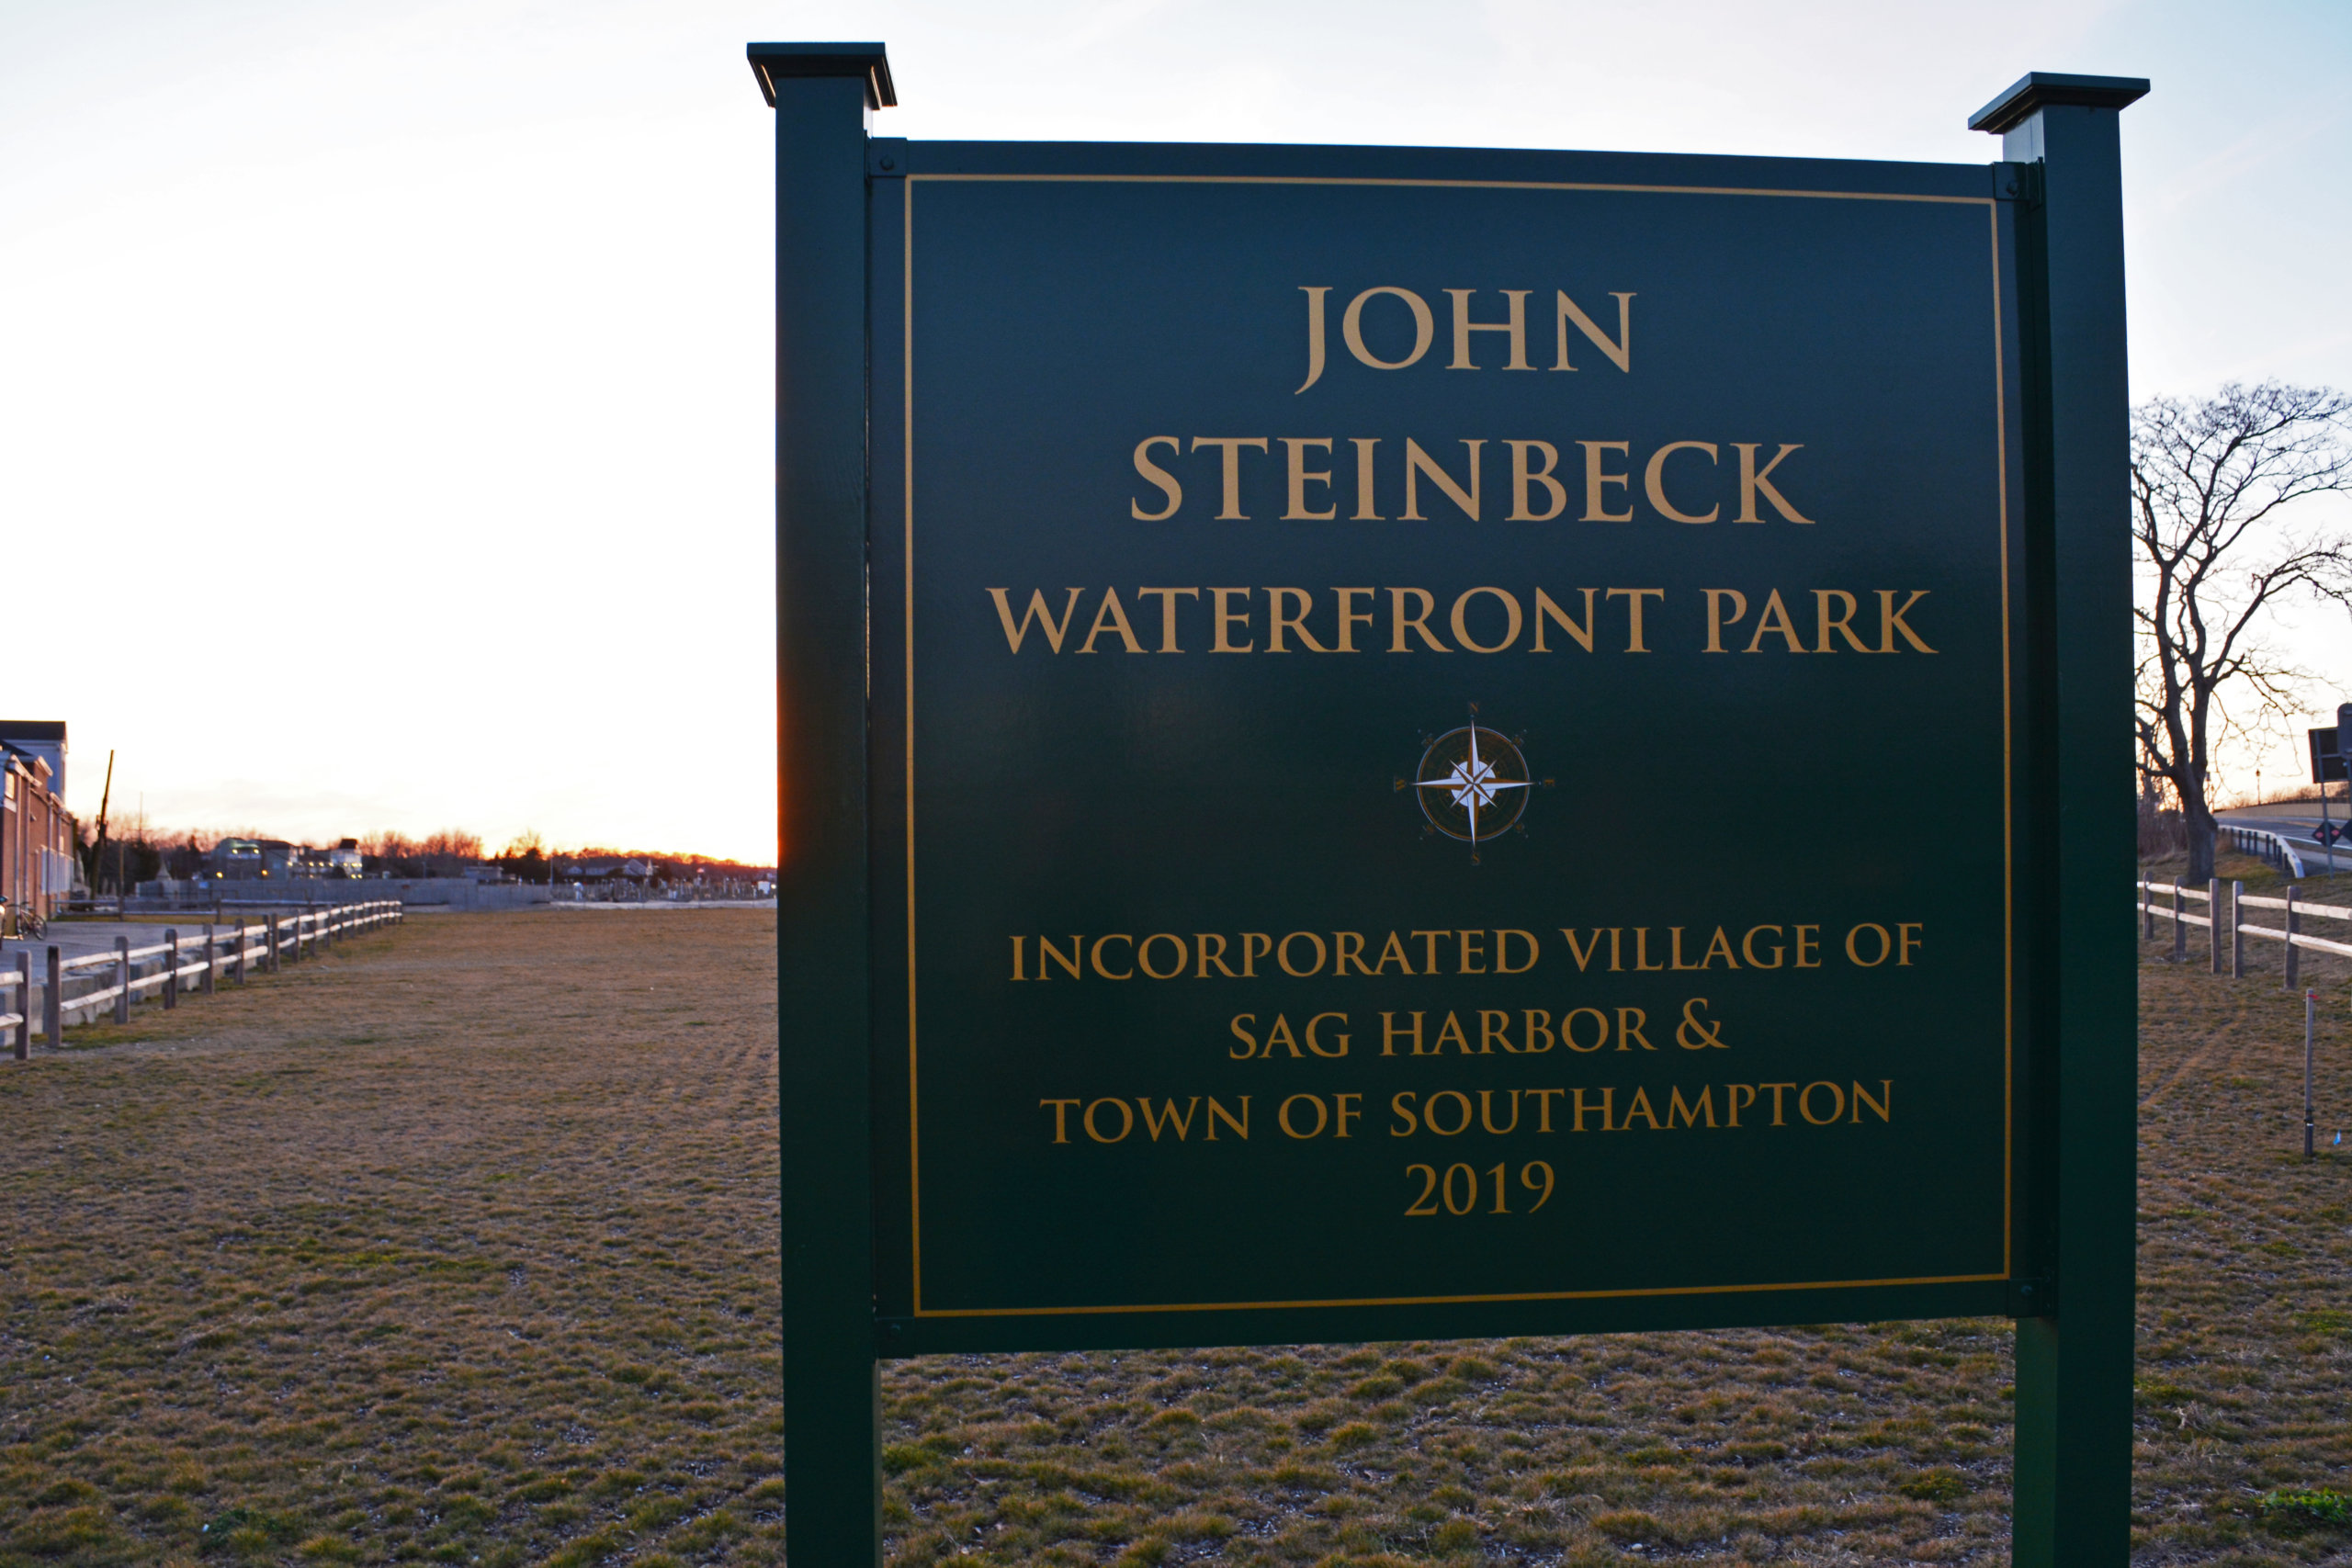 John Steinbeck Waterfront Park in Sag Harbor